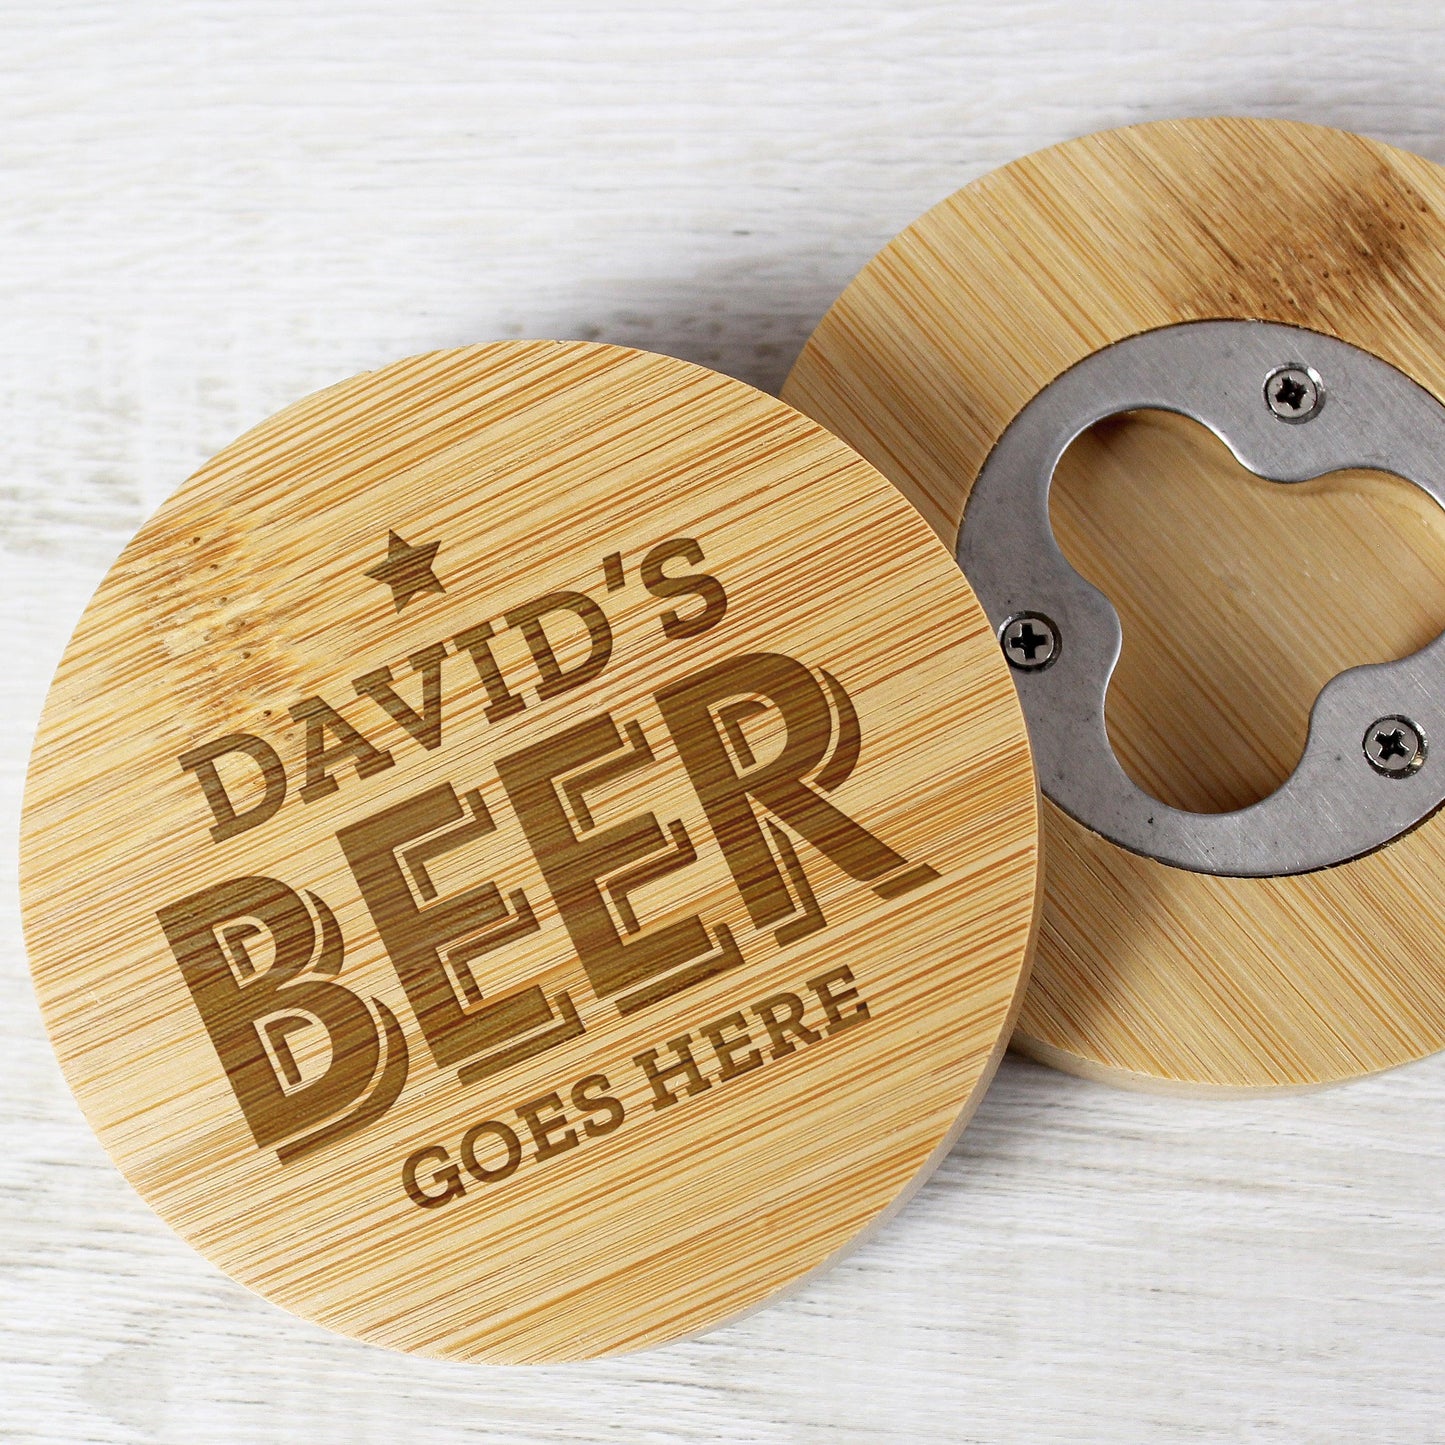 Personalised Beer Goes Here Wooden Bamboo Bottle Opener Coaster